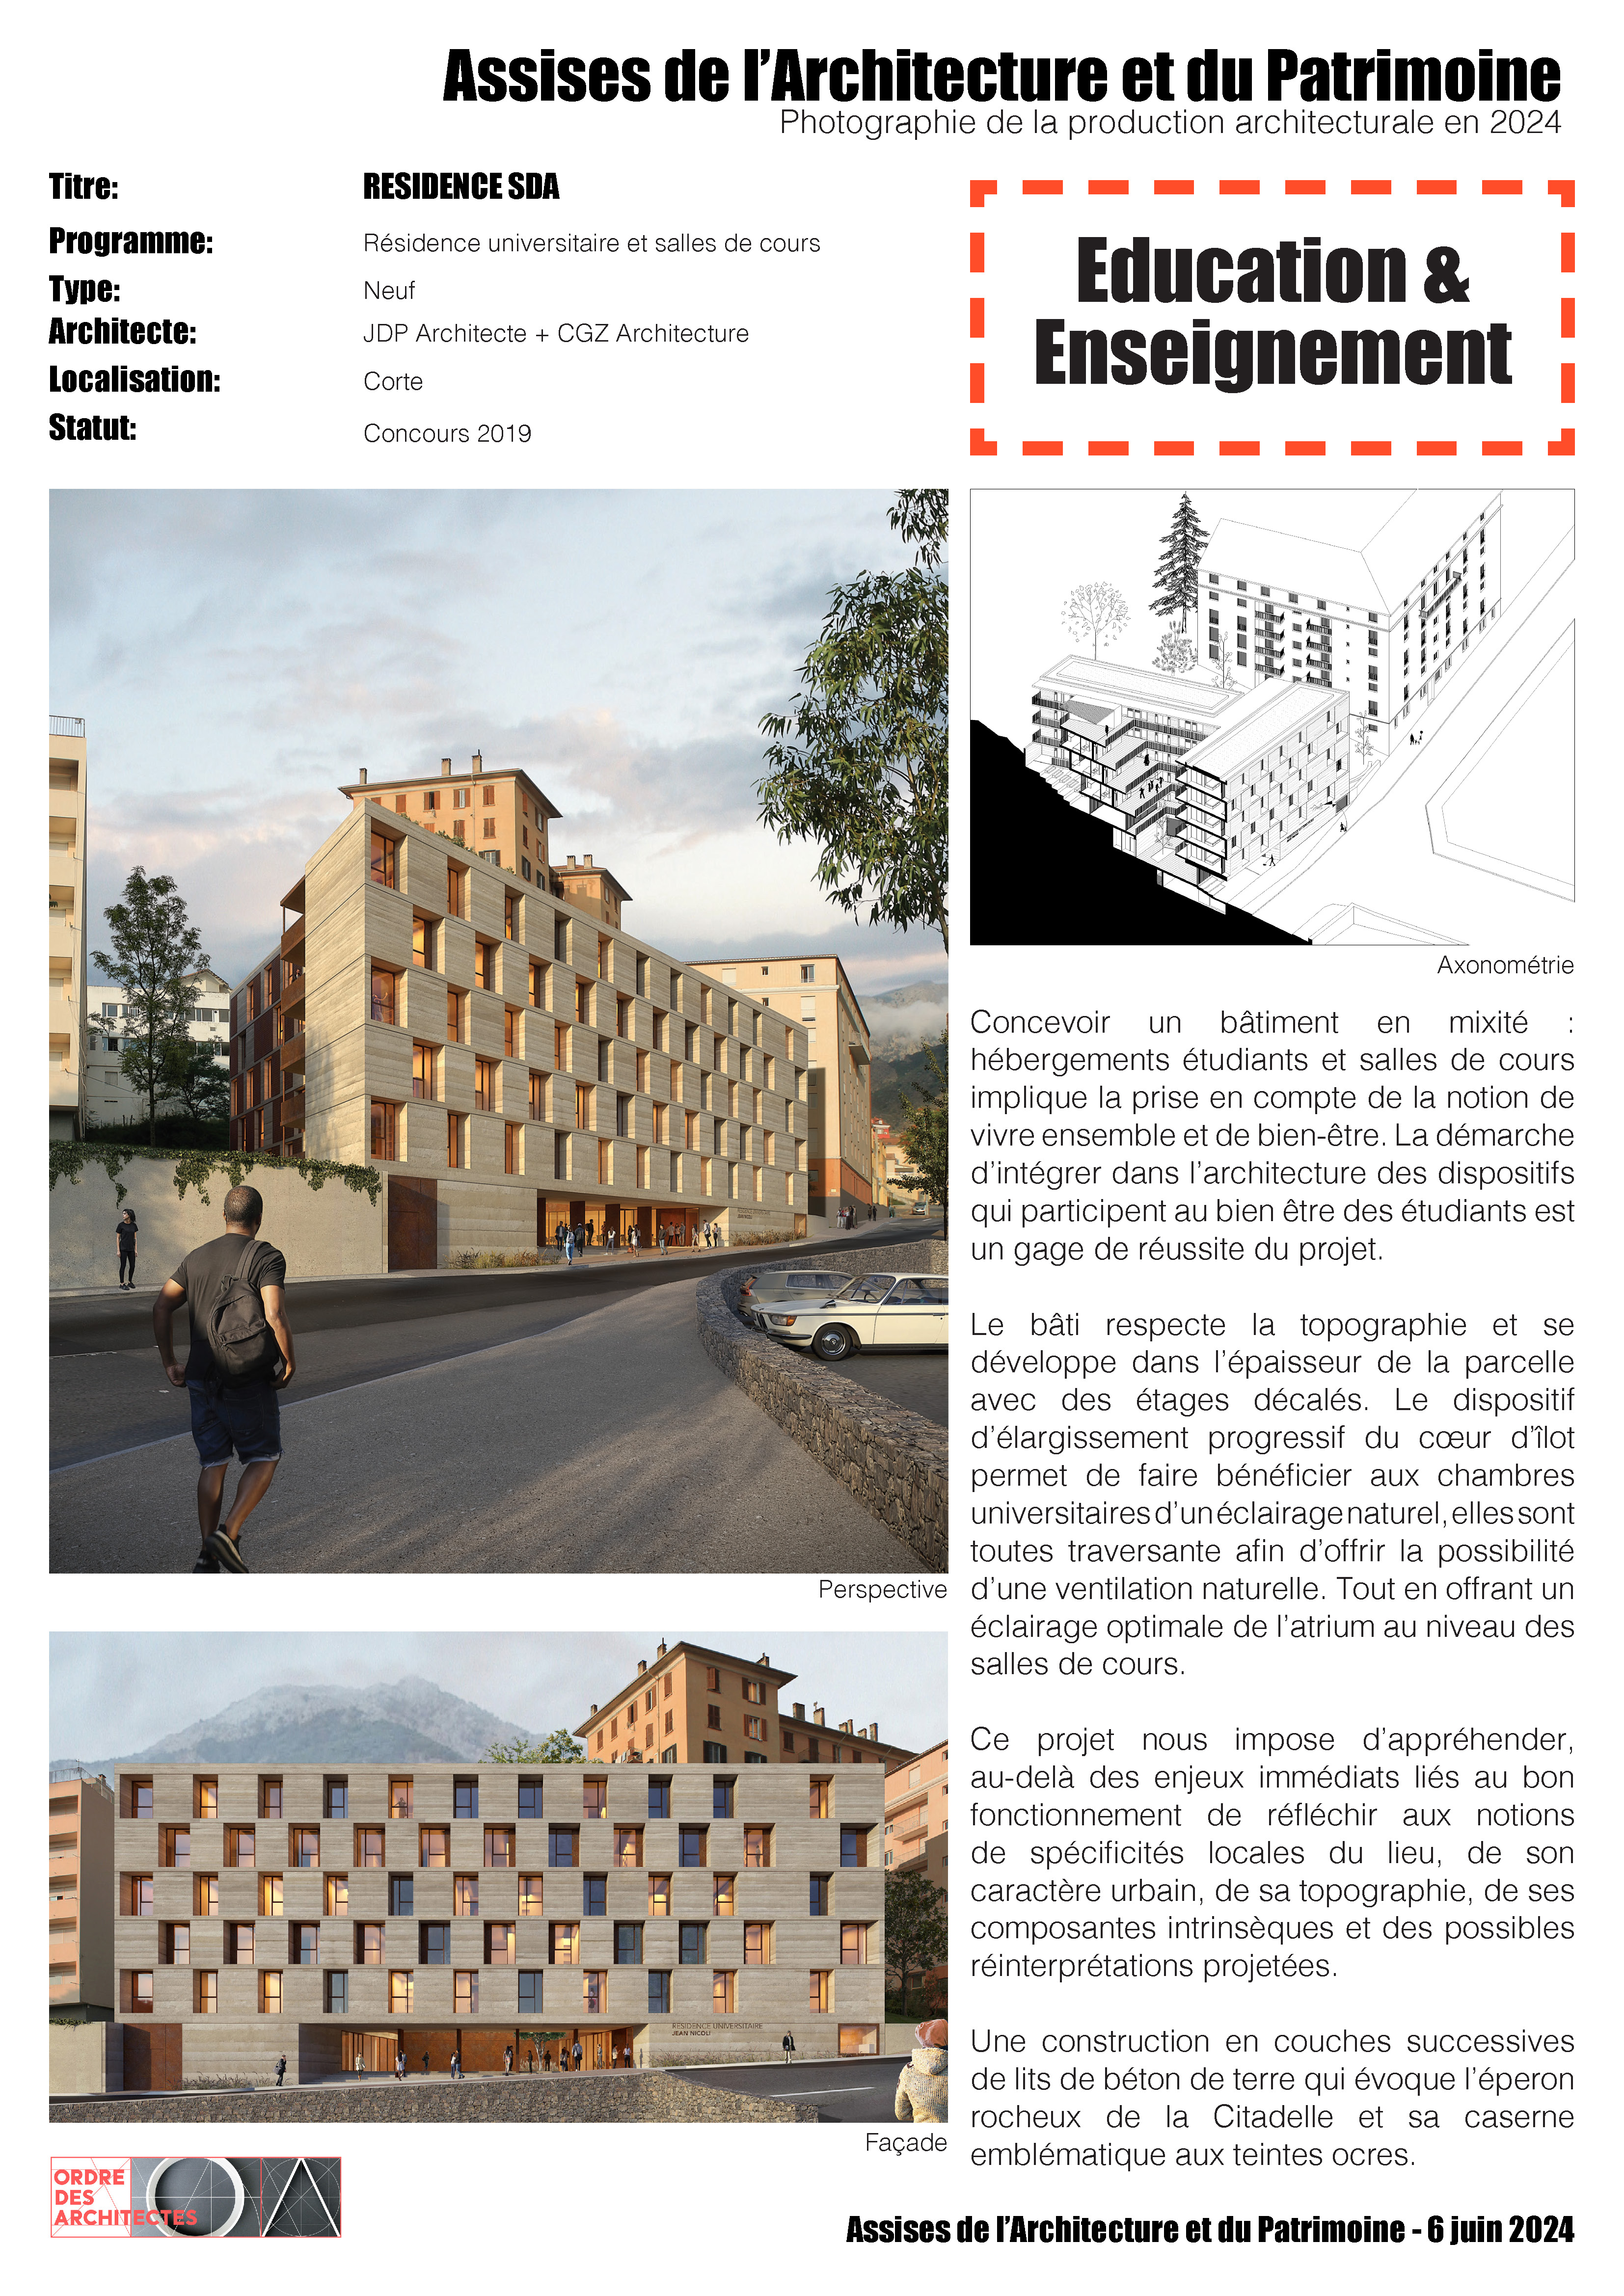 Résidence SDA - JDP Architecte + CGZ Architecture - Corte